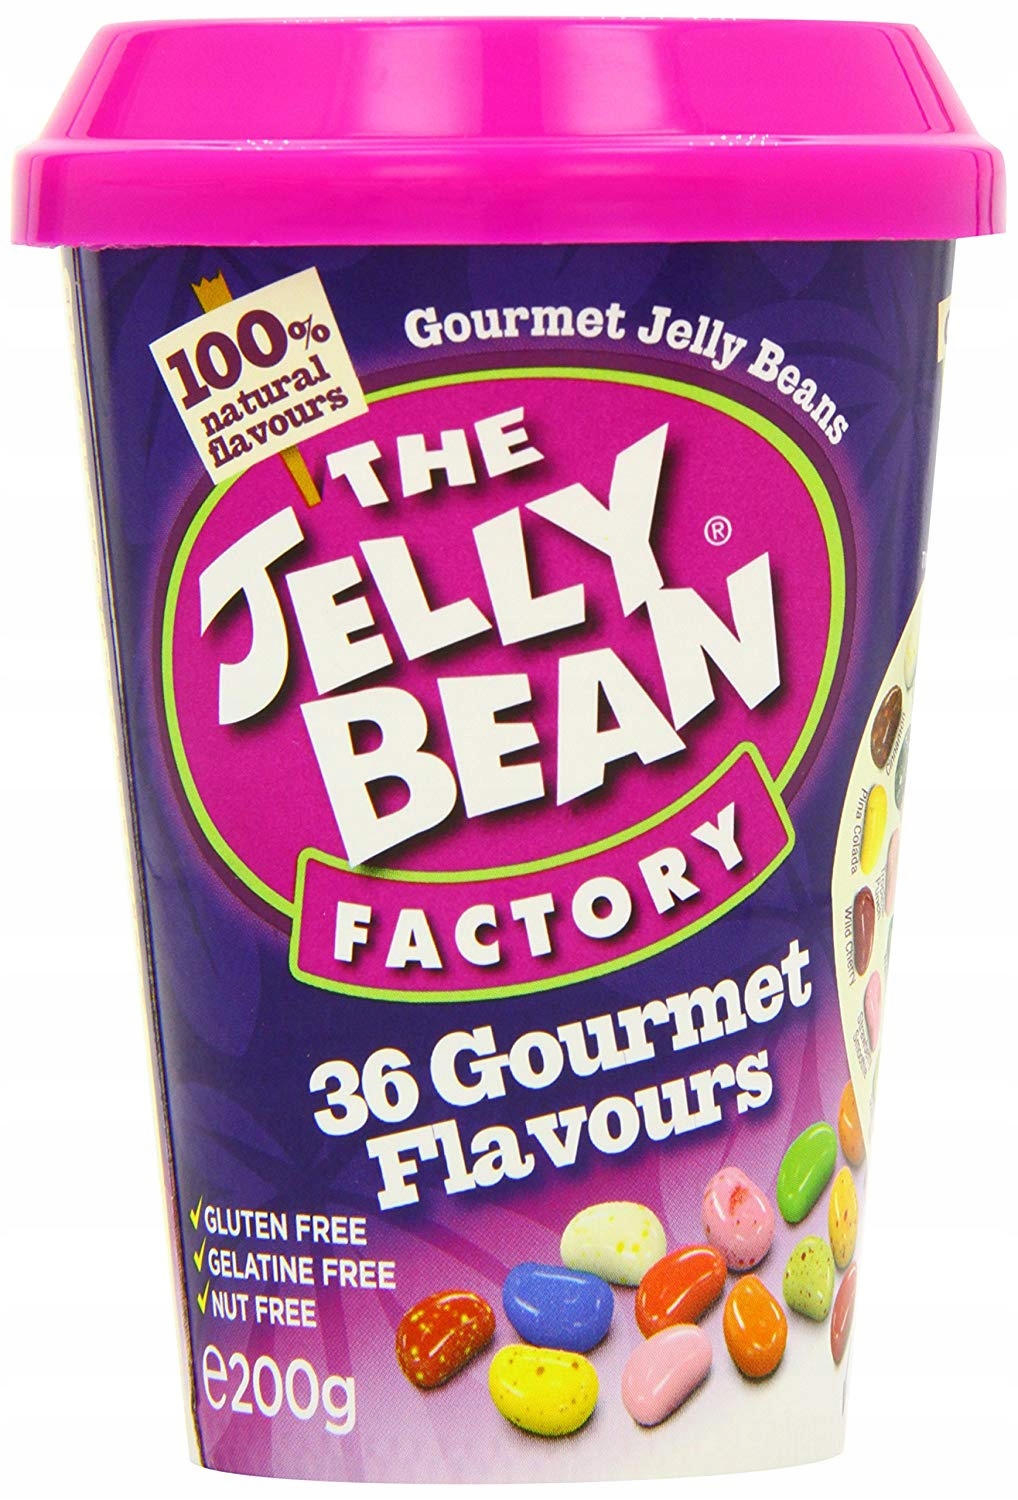 Jelly bean onlyfans. The Jelly Bean Factory 36 вкусов. Драже жевательное «the Jelly Bean Factory» 75г (9*16*75). Мармелад Джелли Бин. The Jelly Bean Factory вкусы.